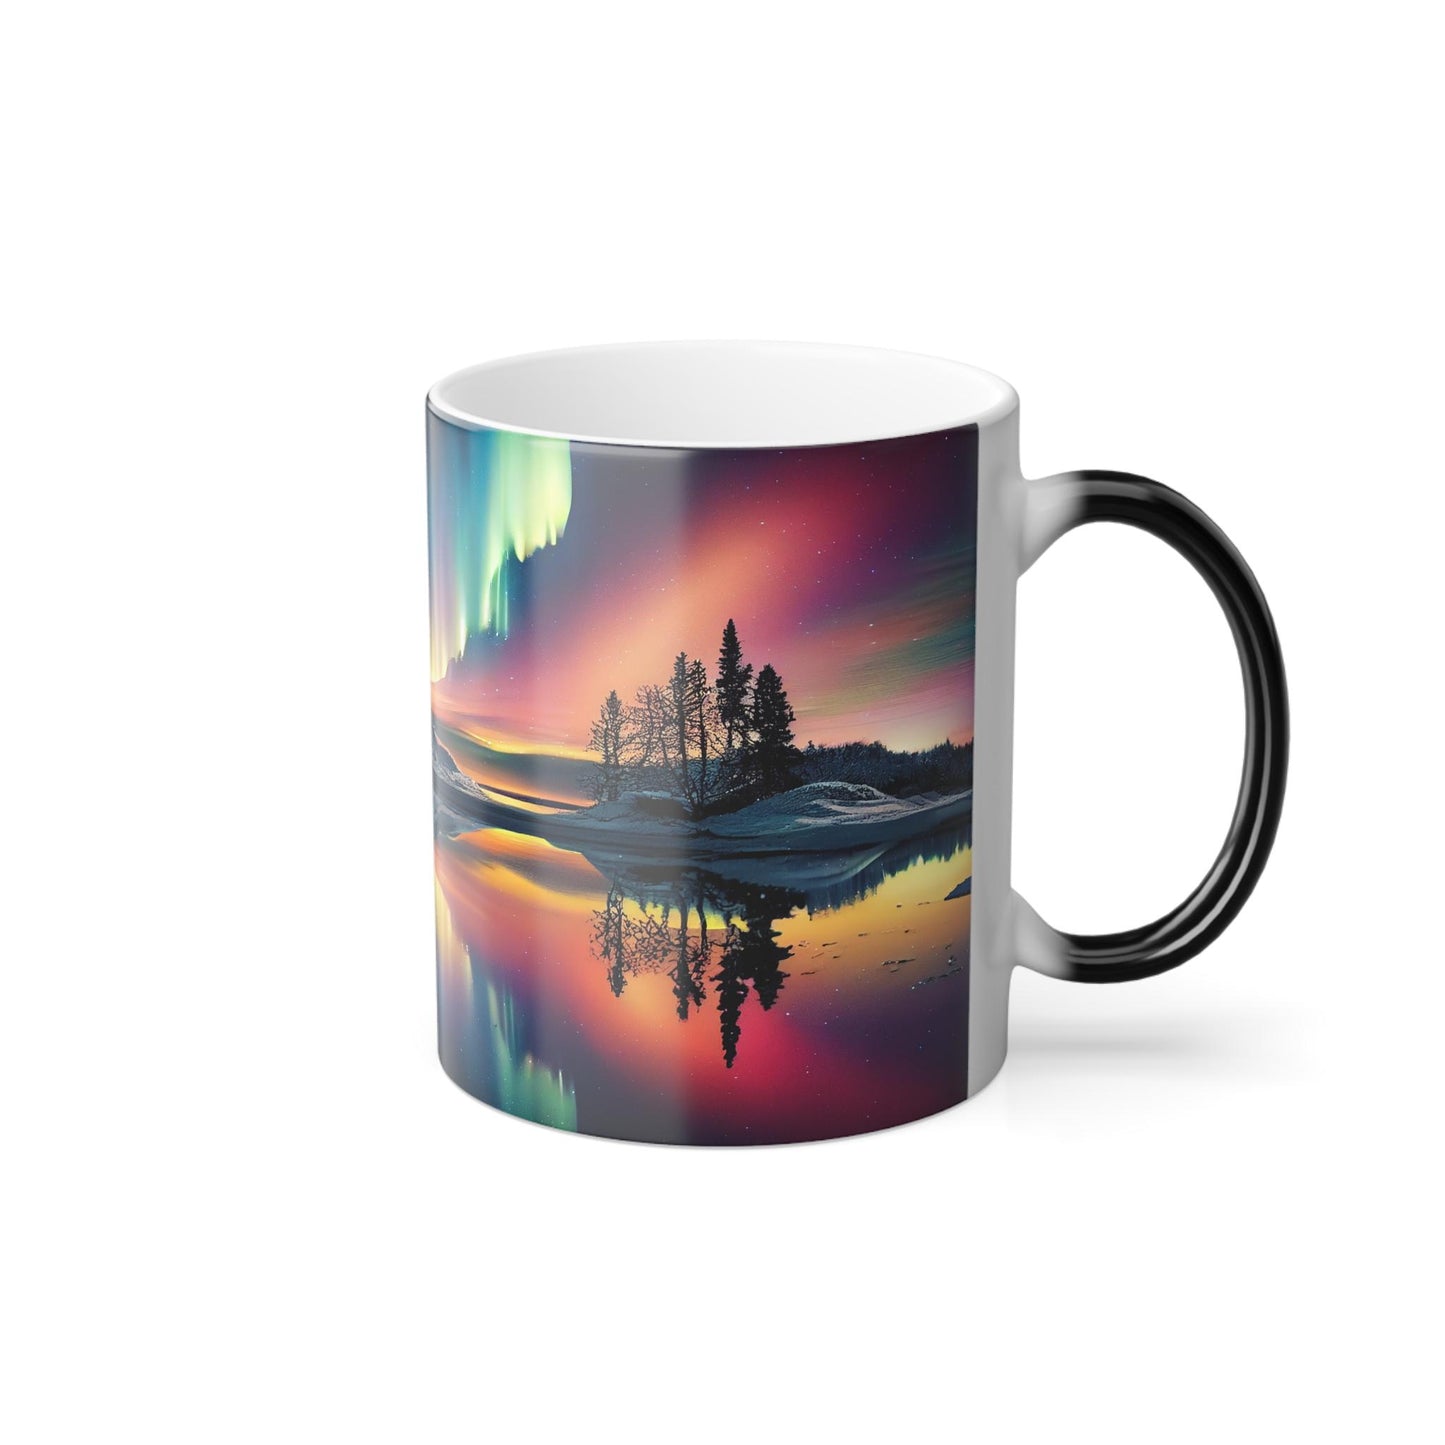 Enchanting Aurora Borealis Heat Sensitive Mug - Northern Lights Magic Color Morphing Mug 11oz - Heat Reactive Night Sky Coffee Cup - Perfect Gift for Nature Lovers 22